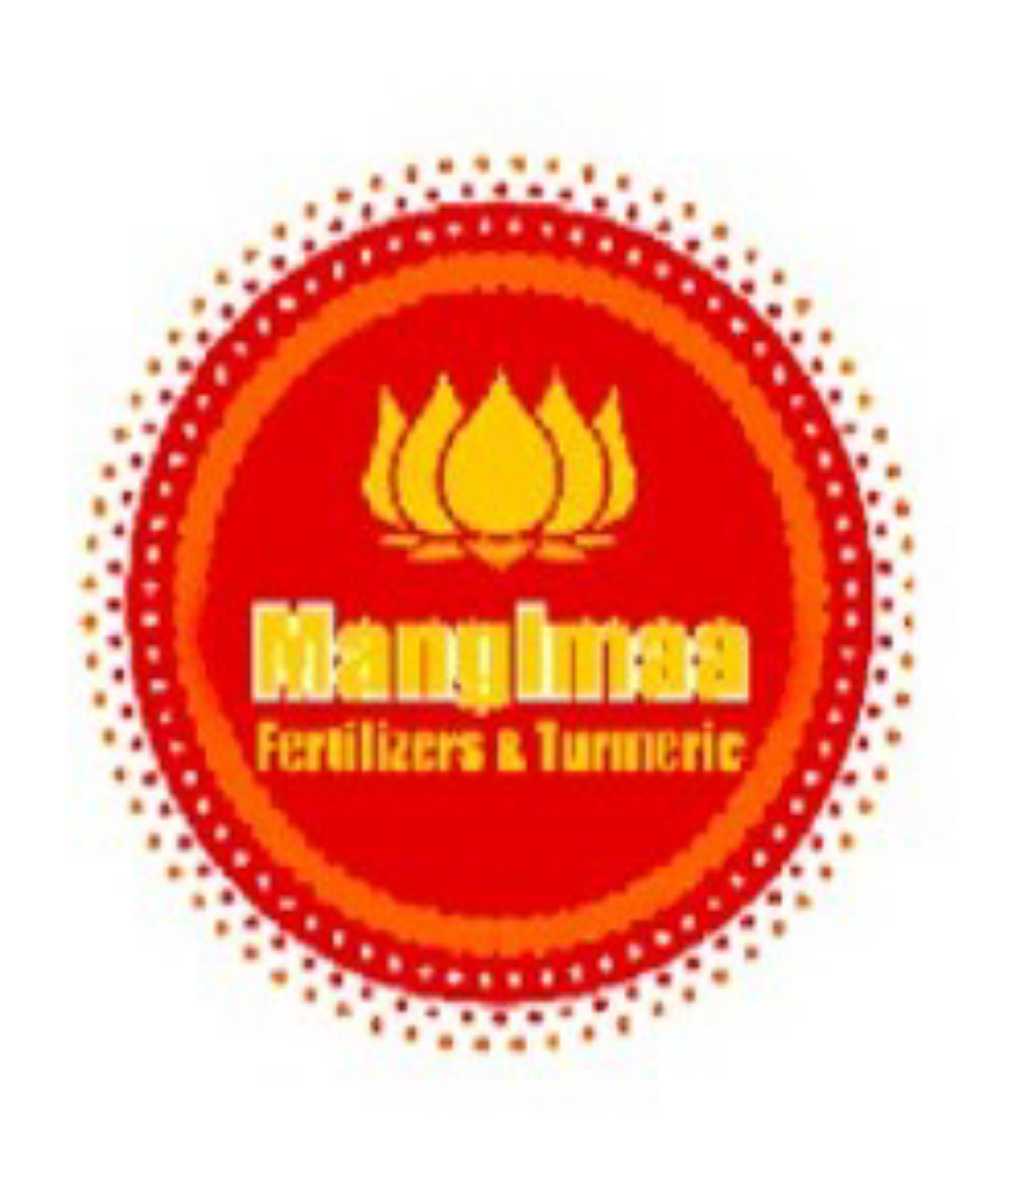 MANGLAMMA TURMERIC & AGRO SERVICES